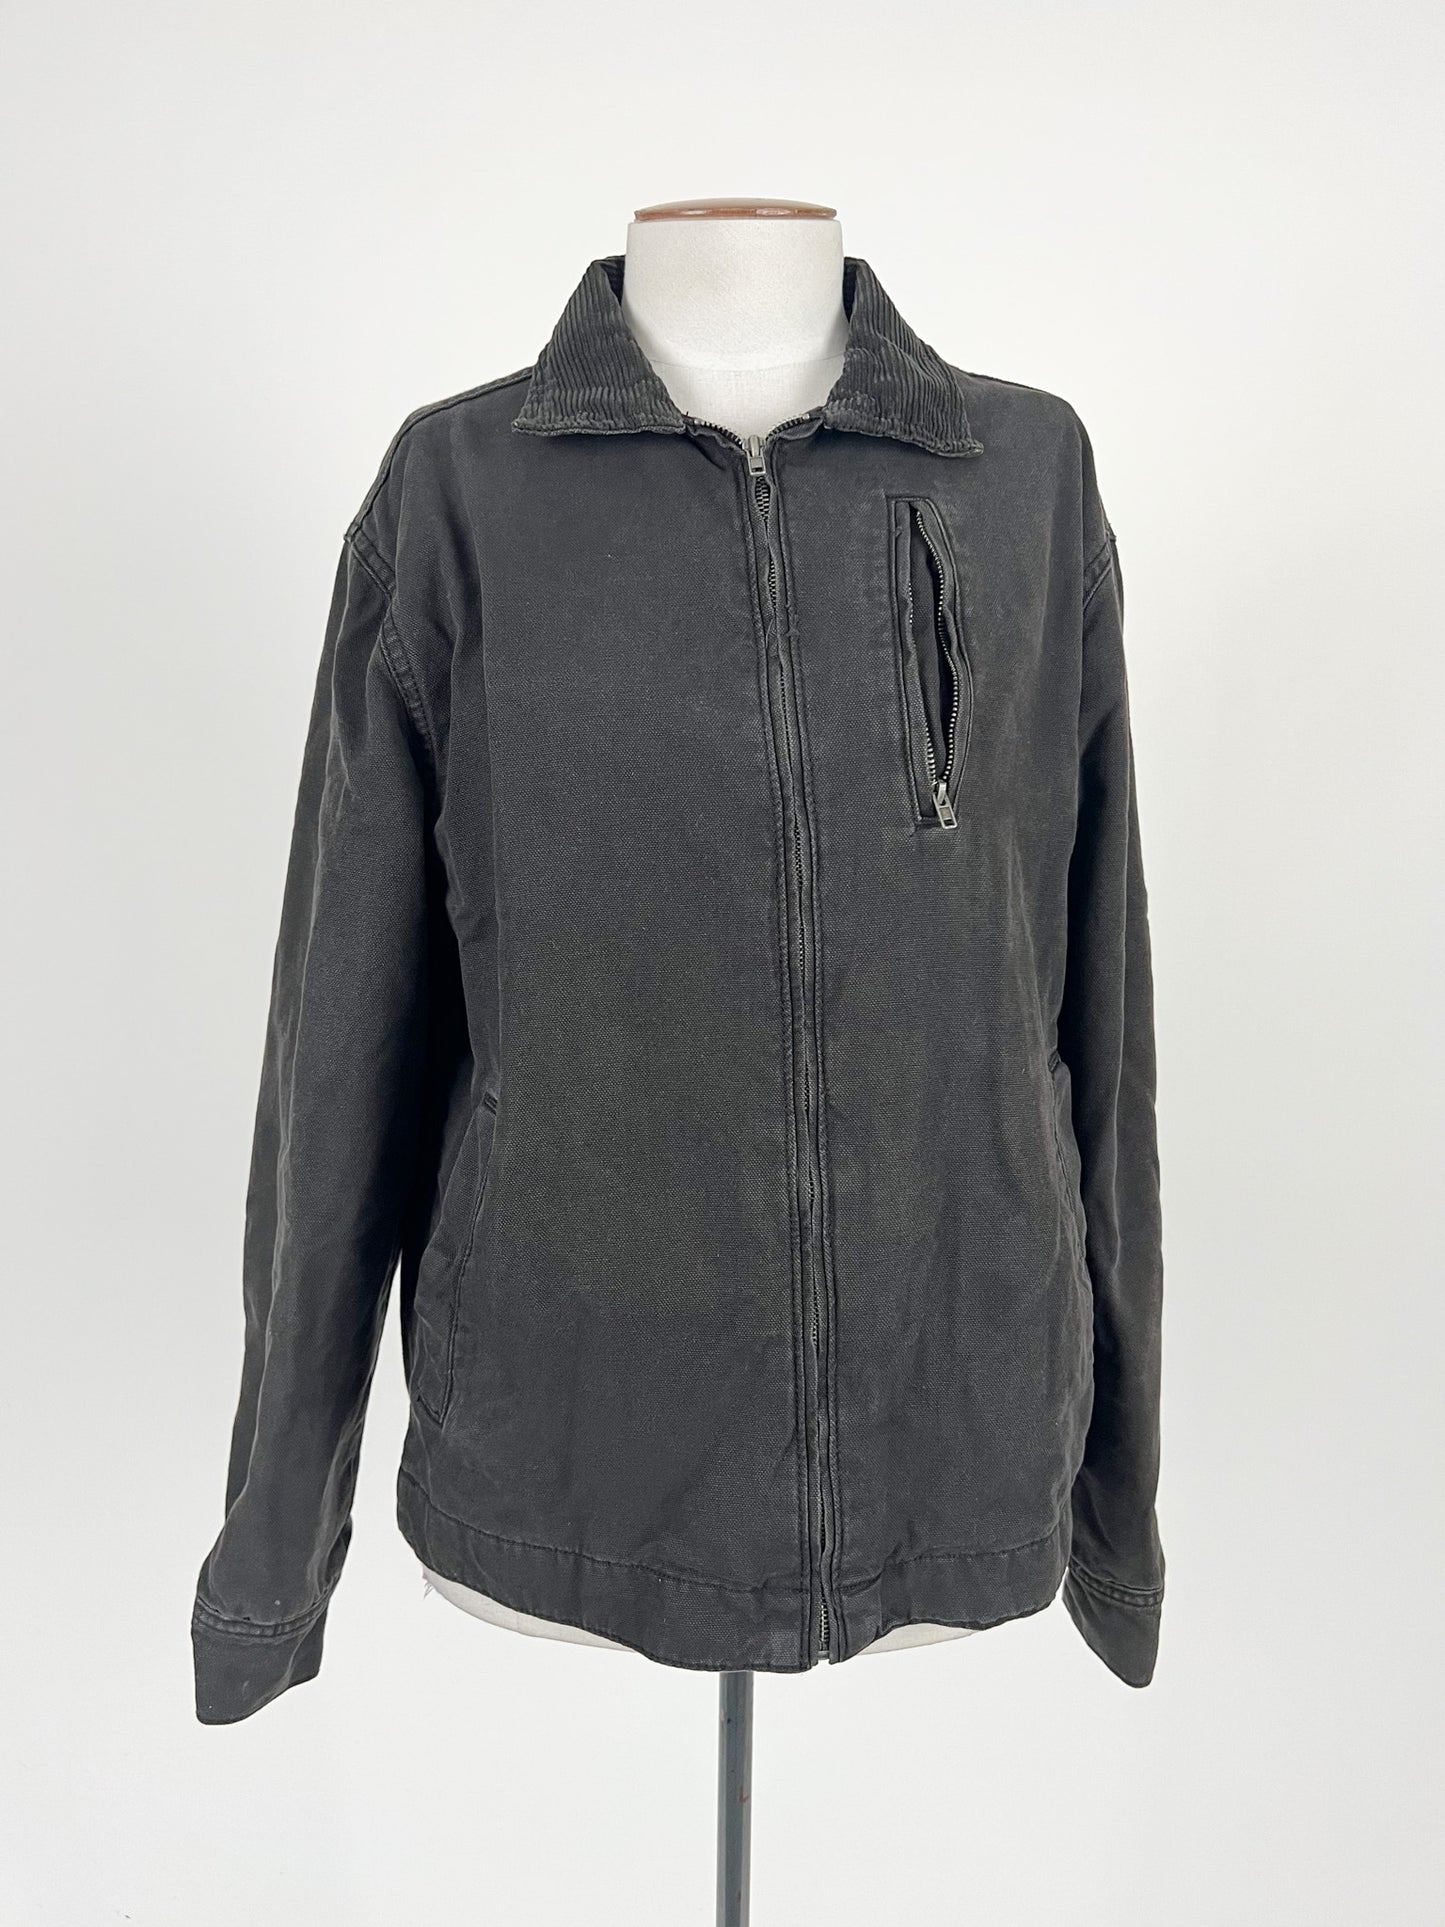 Cotton On | Black Casual/Workwear Jacket | Size S